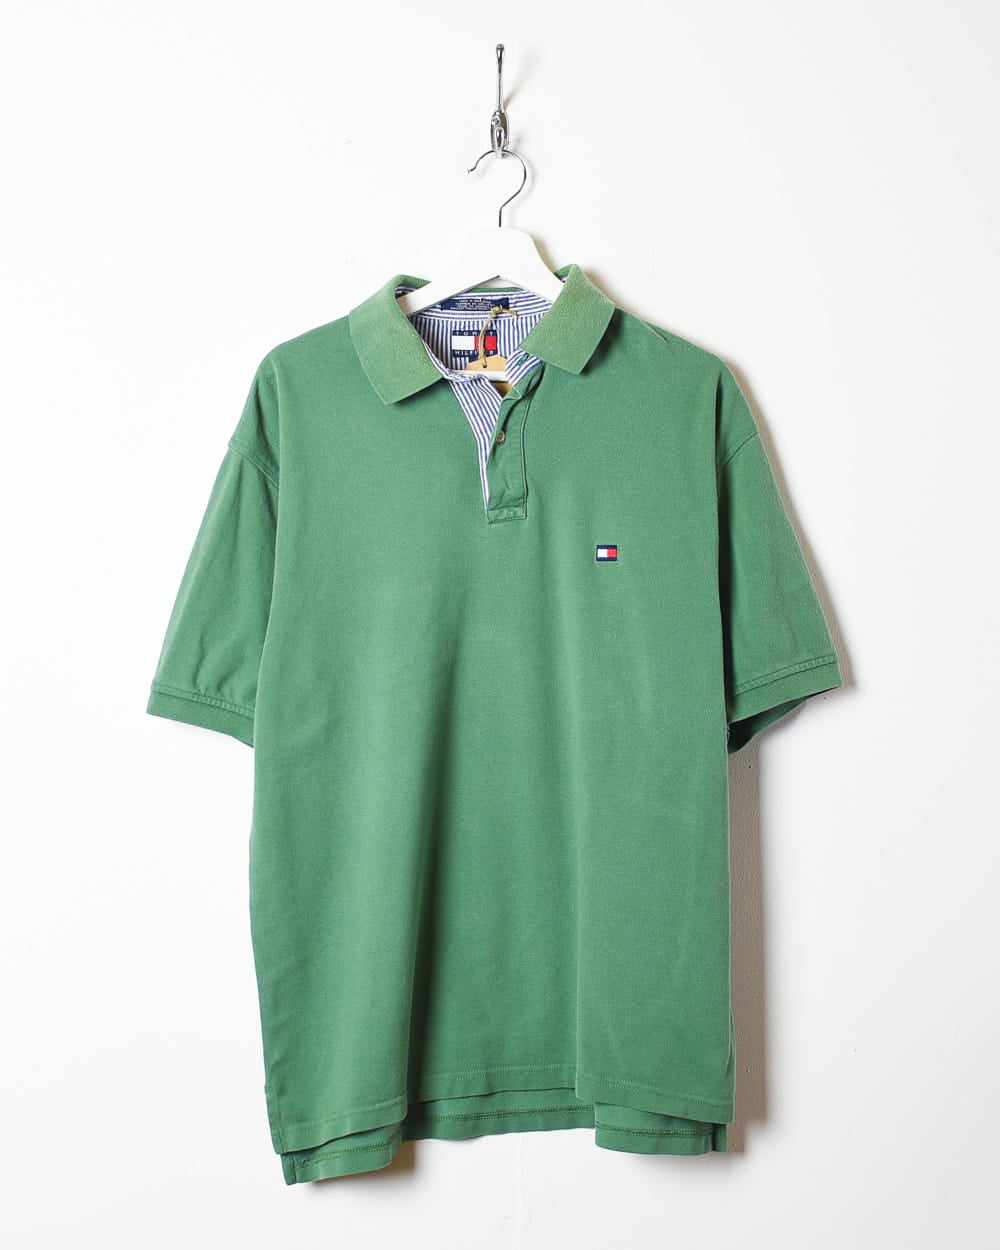 Green Tommy Hilfiger Polo Shirt - Medium